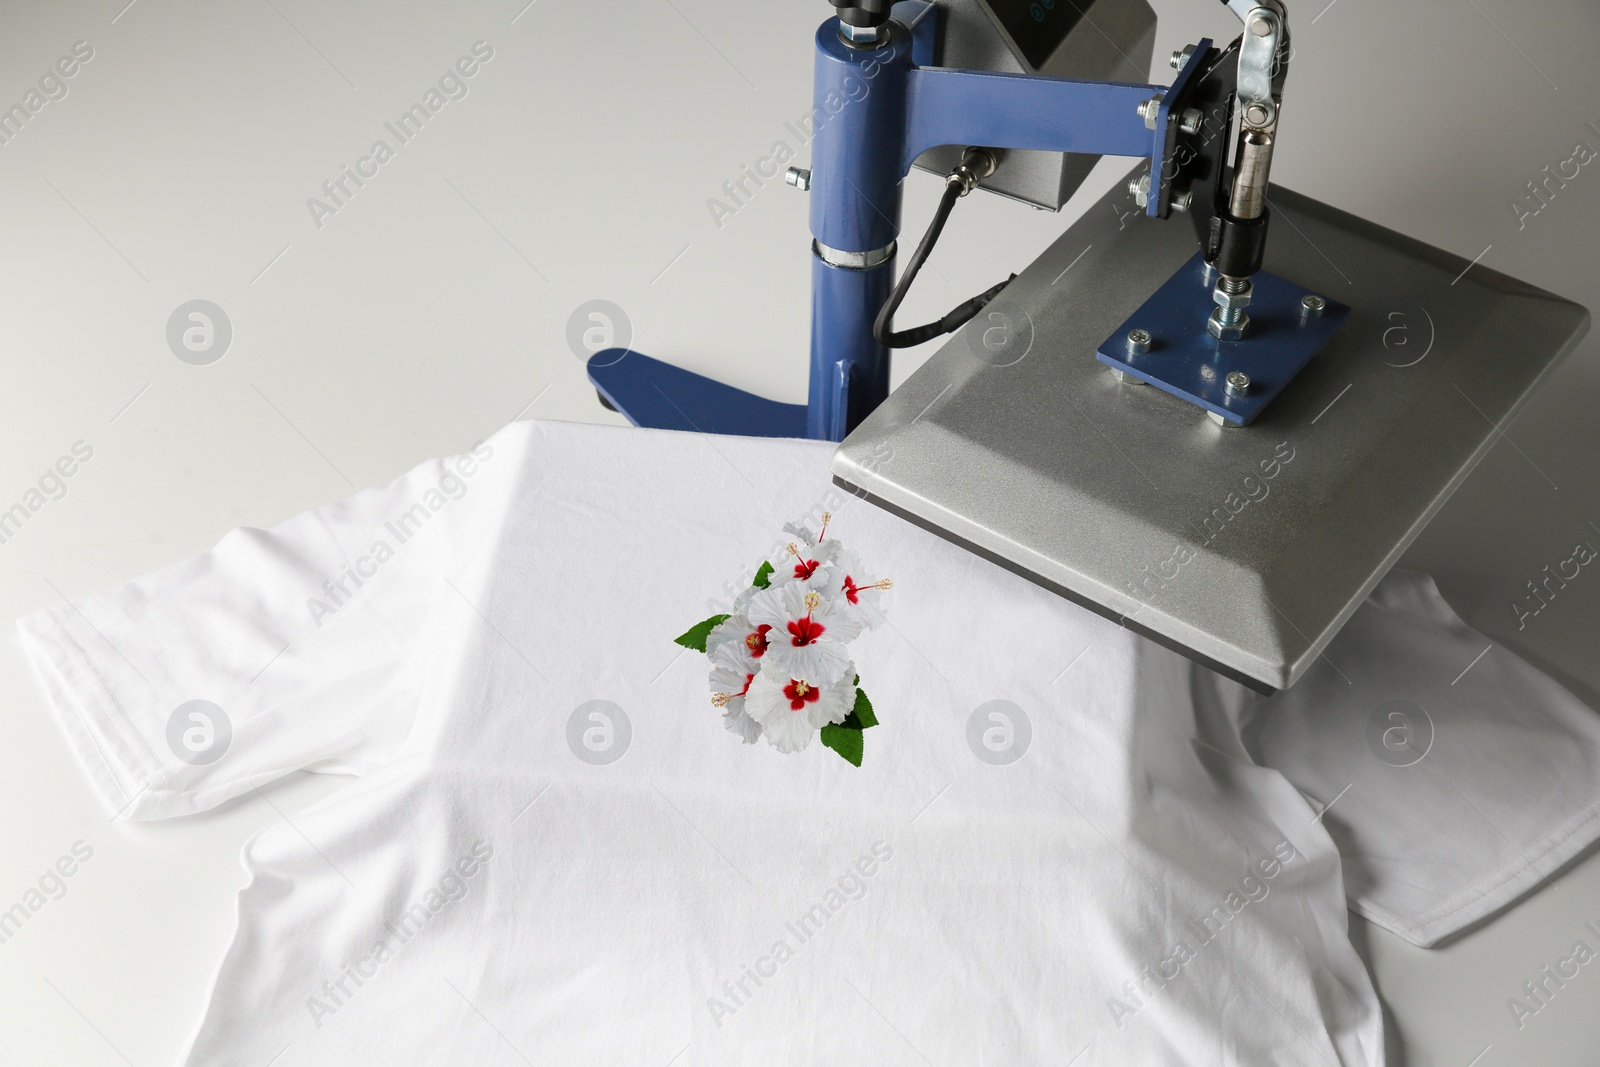 Image of Custom t-shirt. Using heat press to print image of beautiful hibiscus flowers